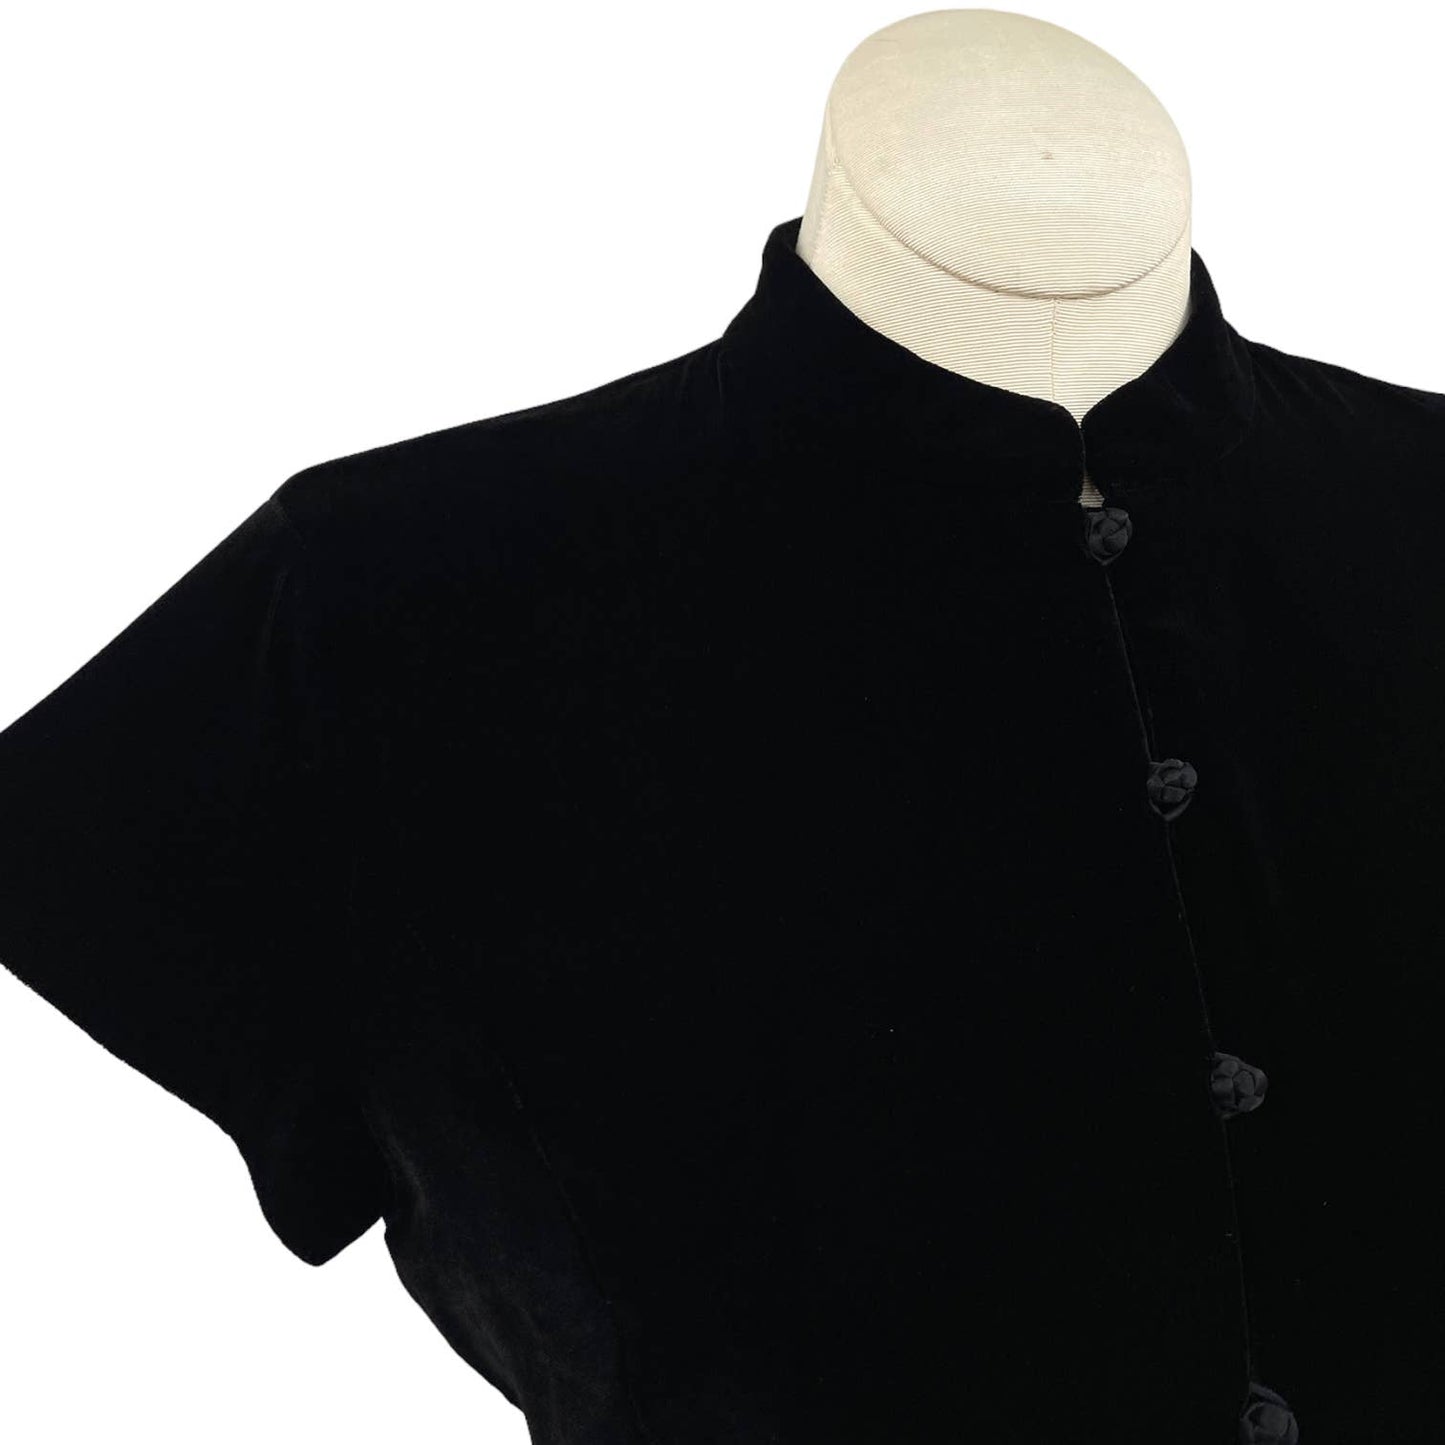 Vintage 90s Black Velvet Short Sleeve Button Up Top Mandarin Collar Ann Taylor M